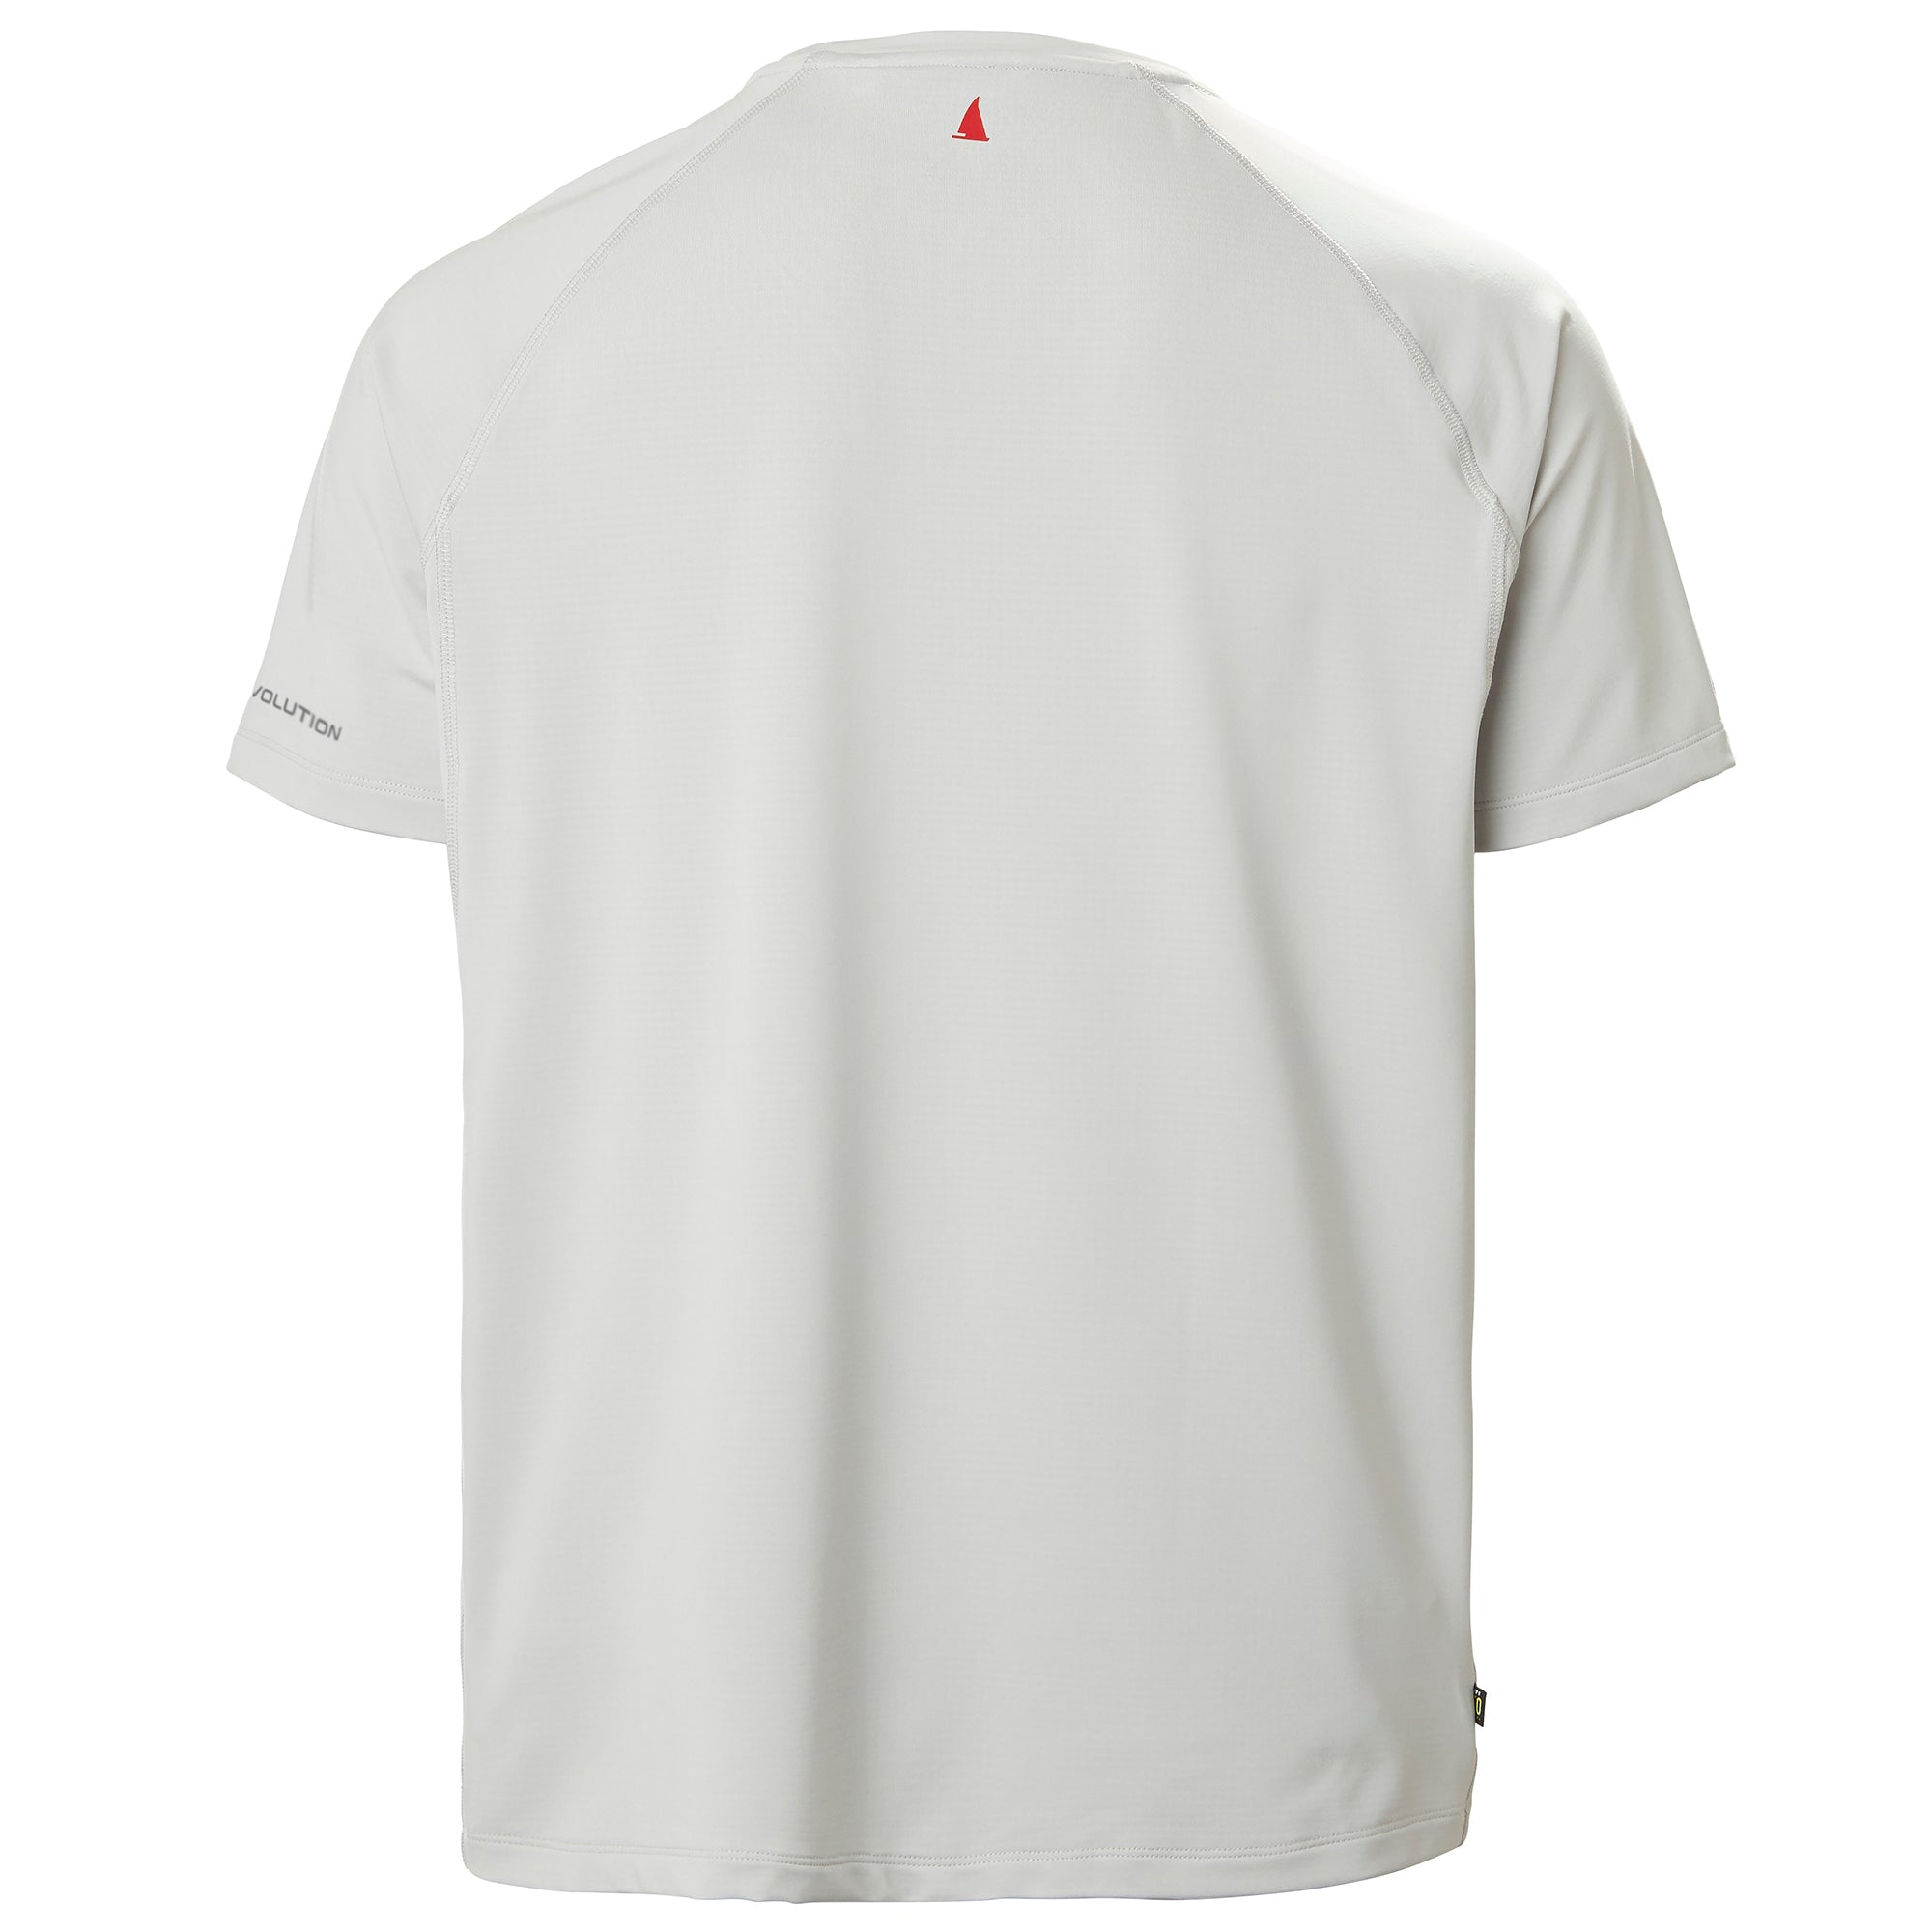 MUSTO - Sunblock Short Sleeve UV T-Shirt